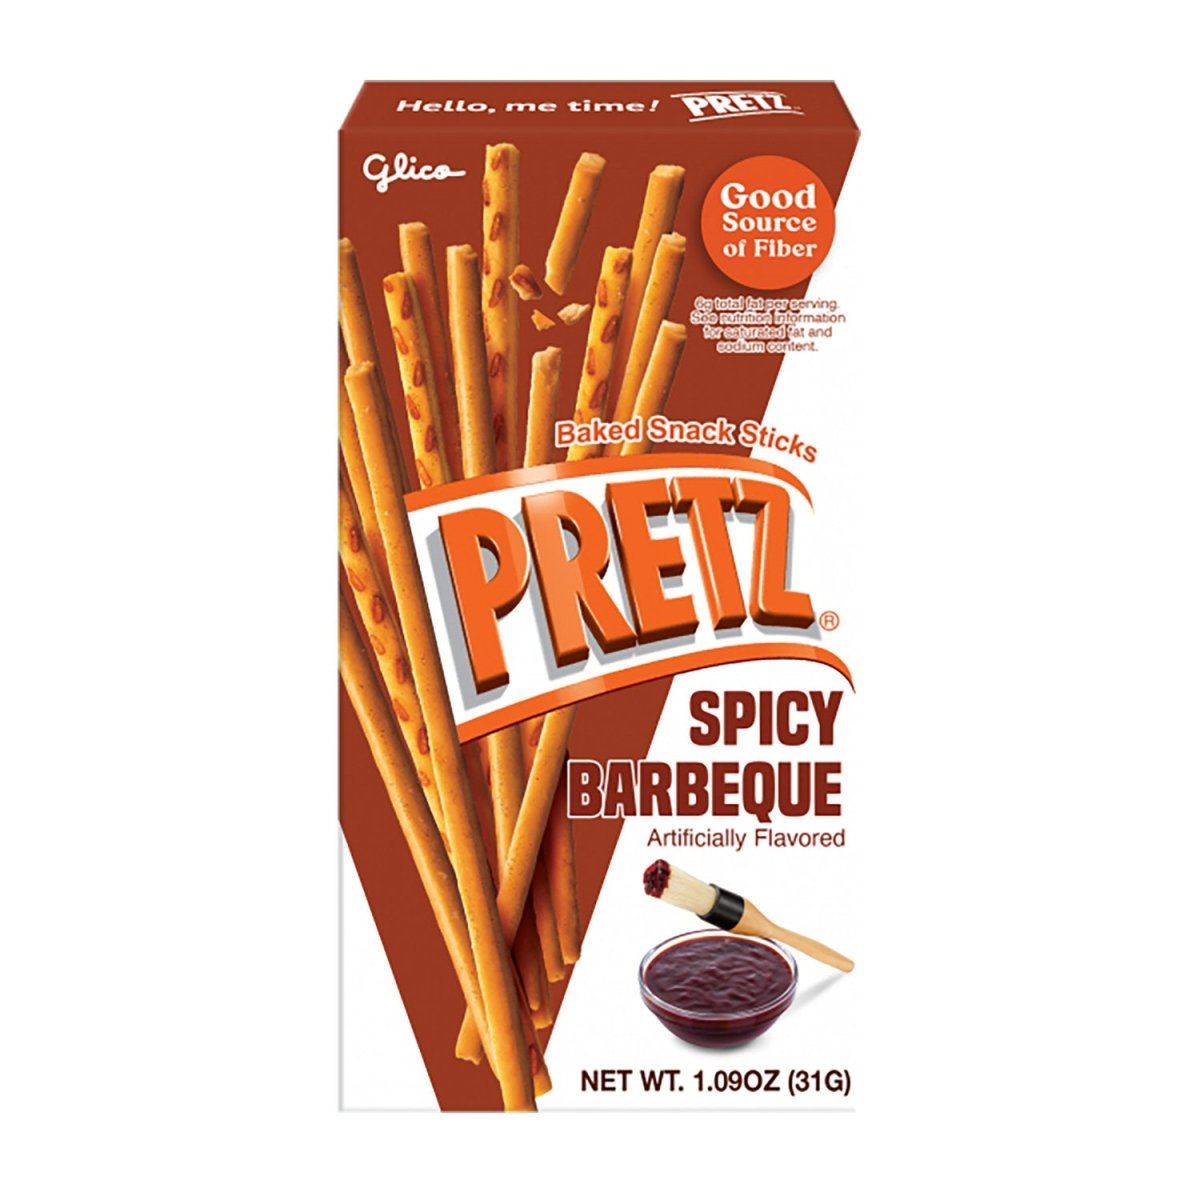 Glico Pretz Spicy Barbeque 31g - Candy Mail UK